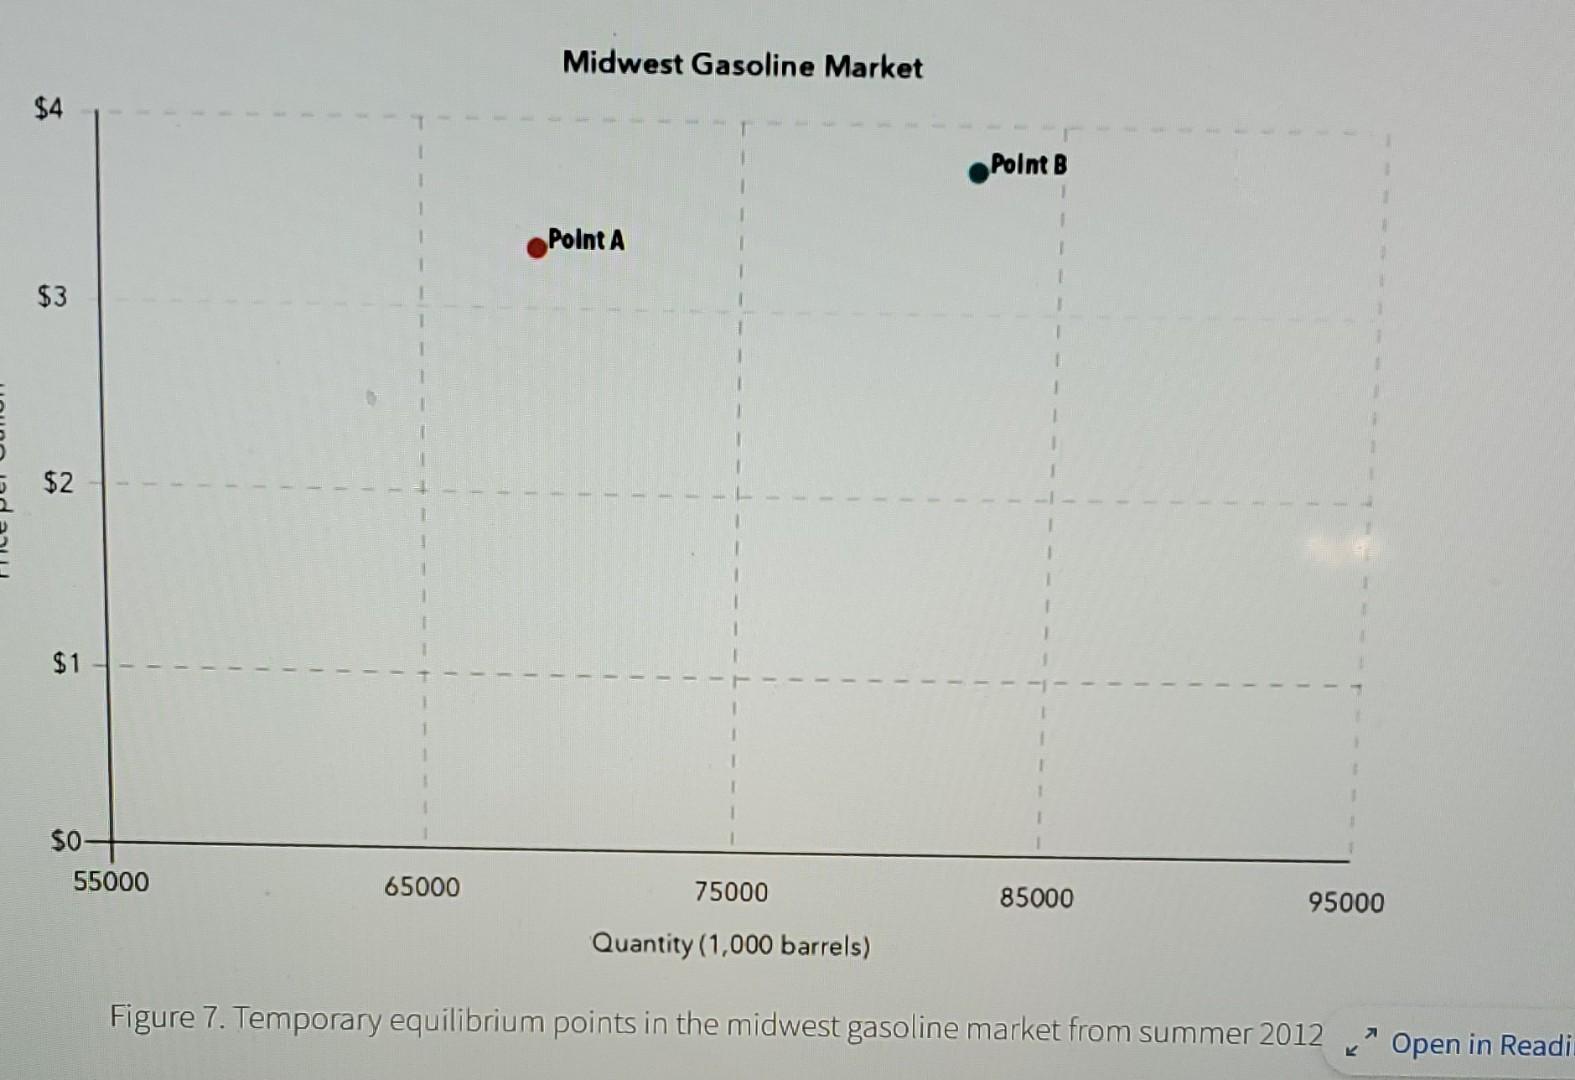 Midwest Gasoline Market
Figure 7. Temporary equilibrium points in the midwest gasoline market from summer 2012